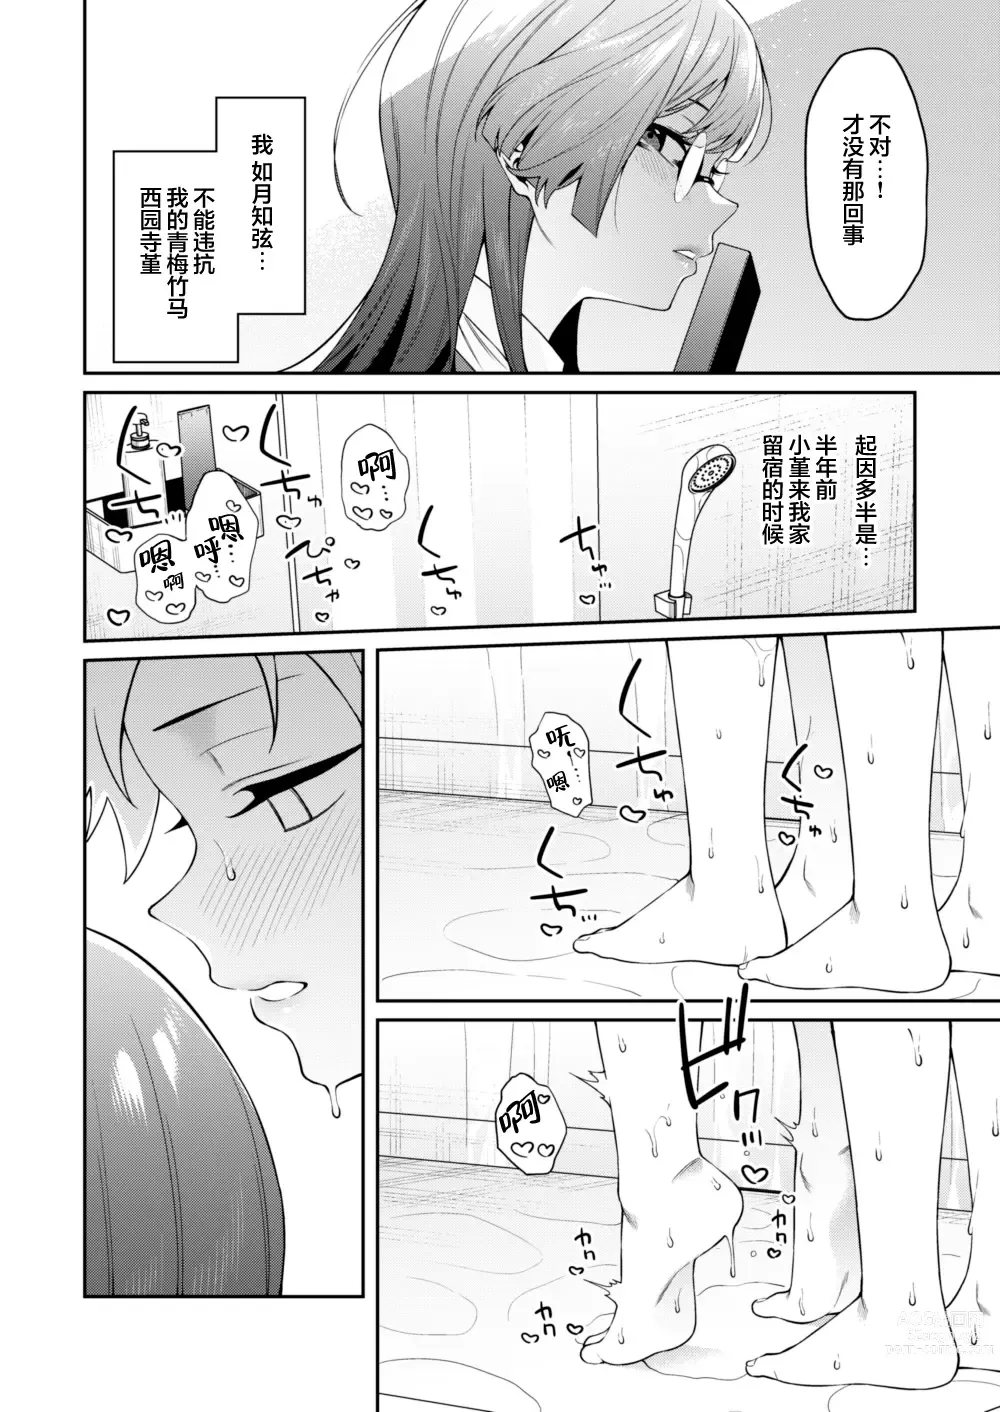 Page 5 of doujinshi Sumire-chan ha atama ga ii.